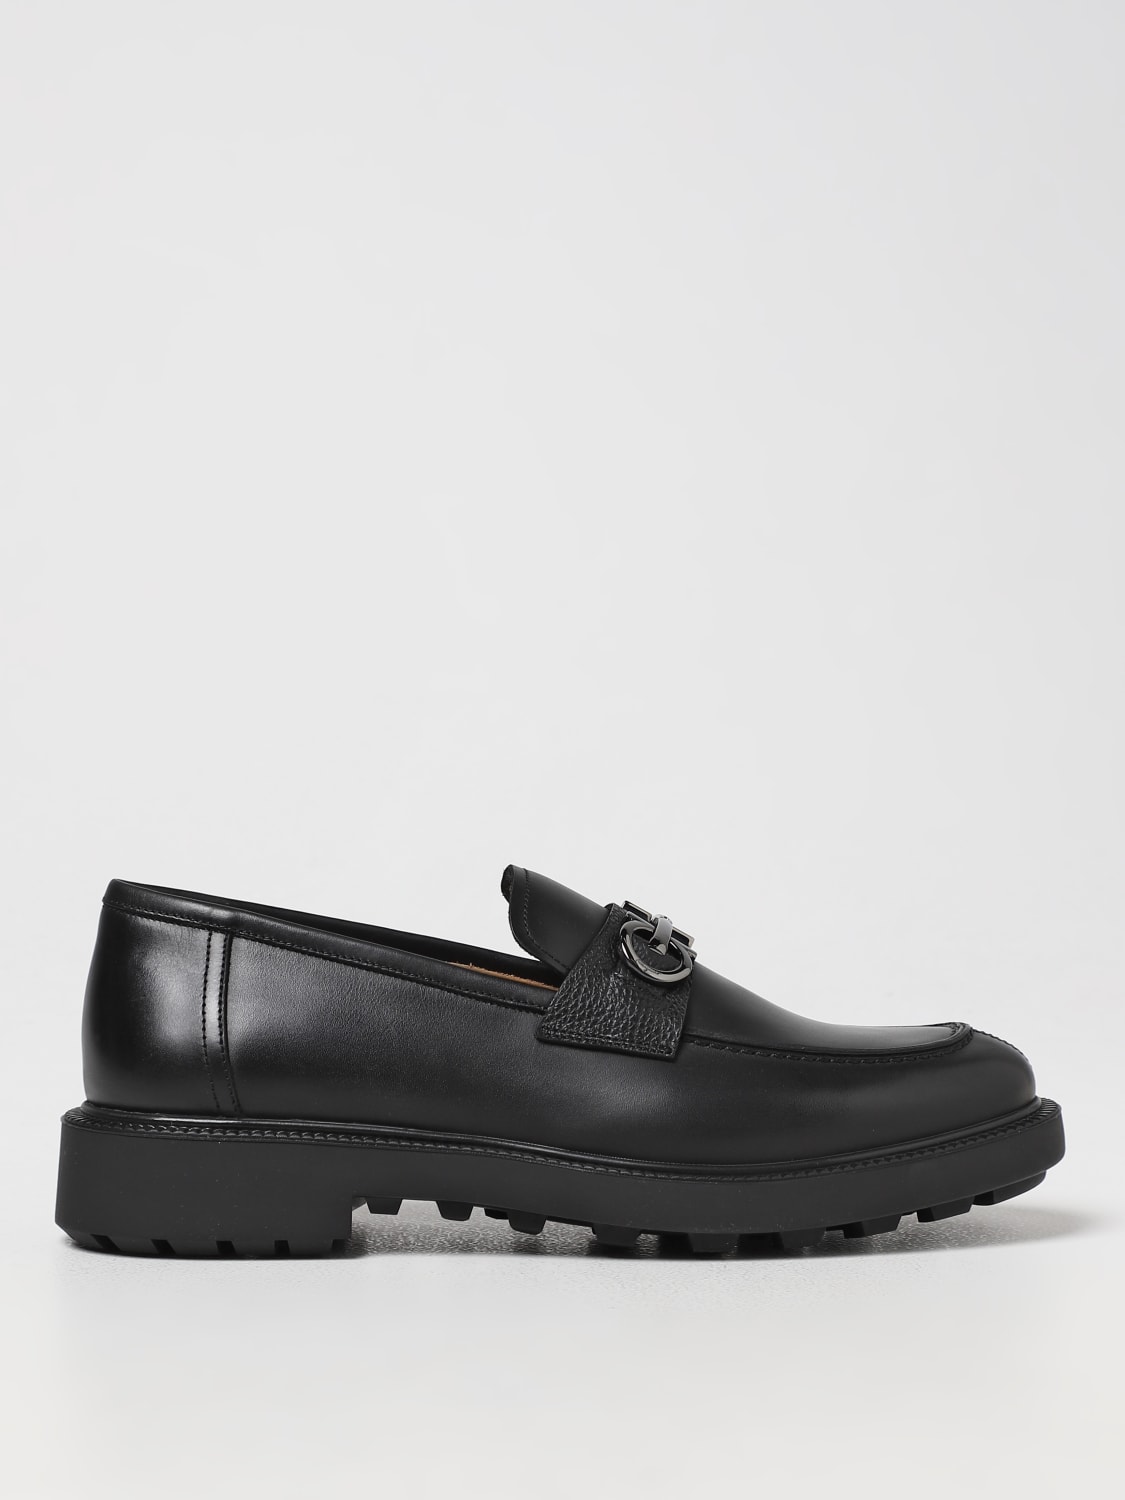 Ferragamo Gancini patent-leather loafers - Black